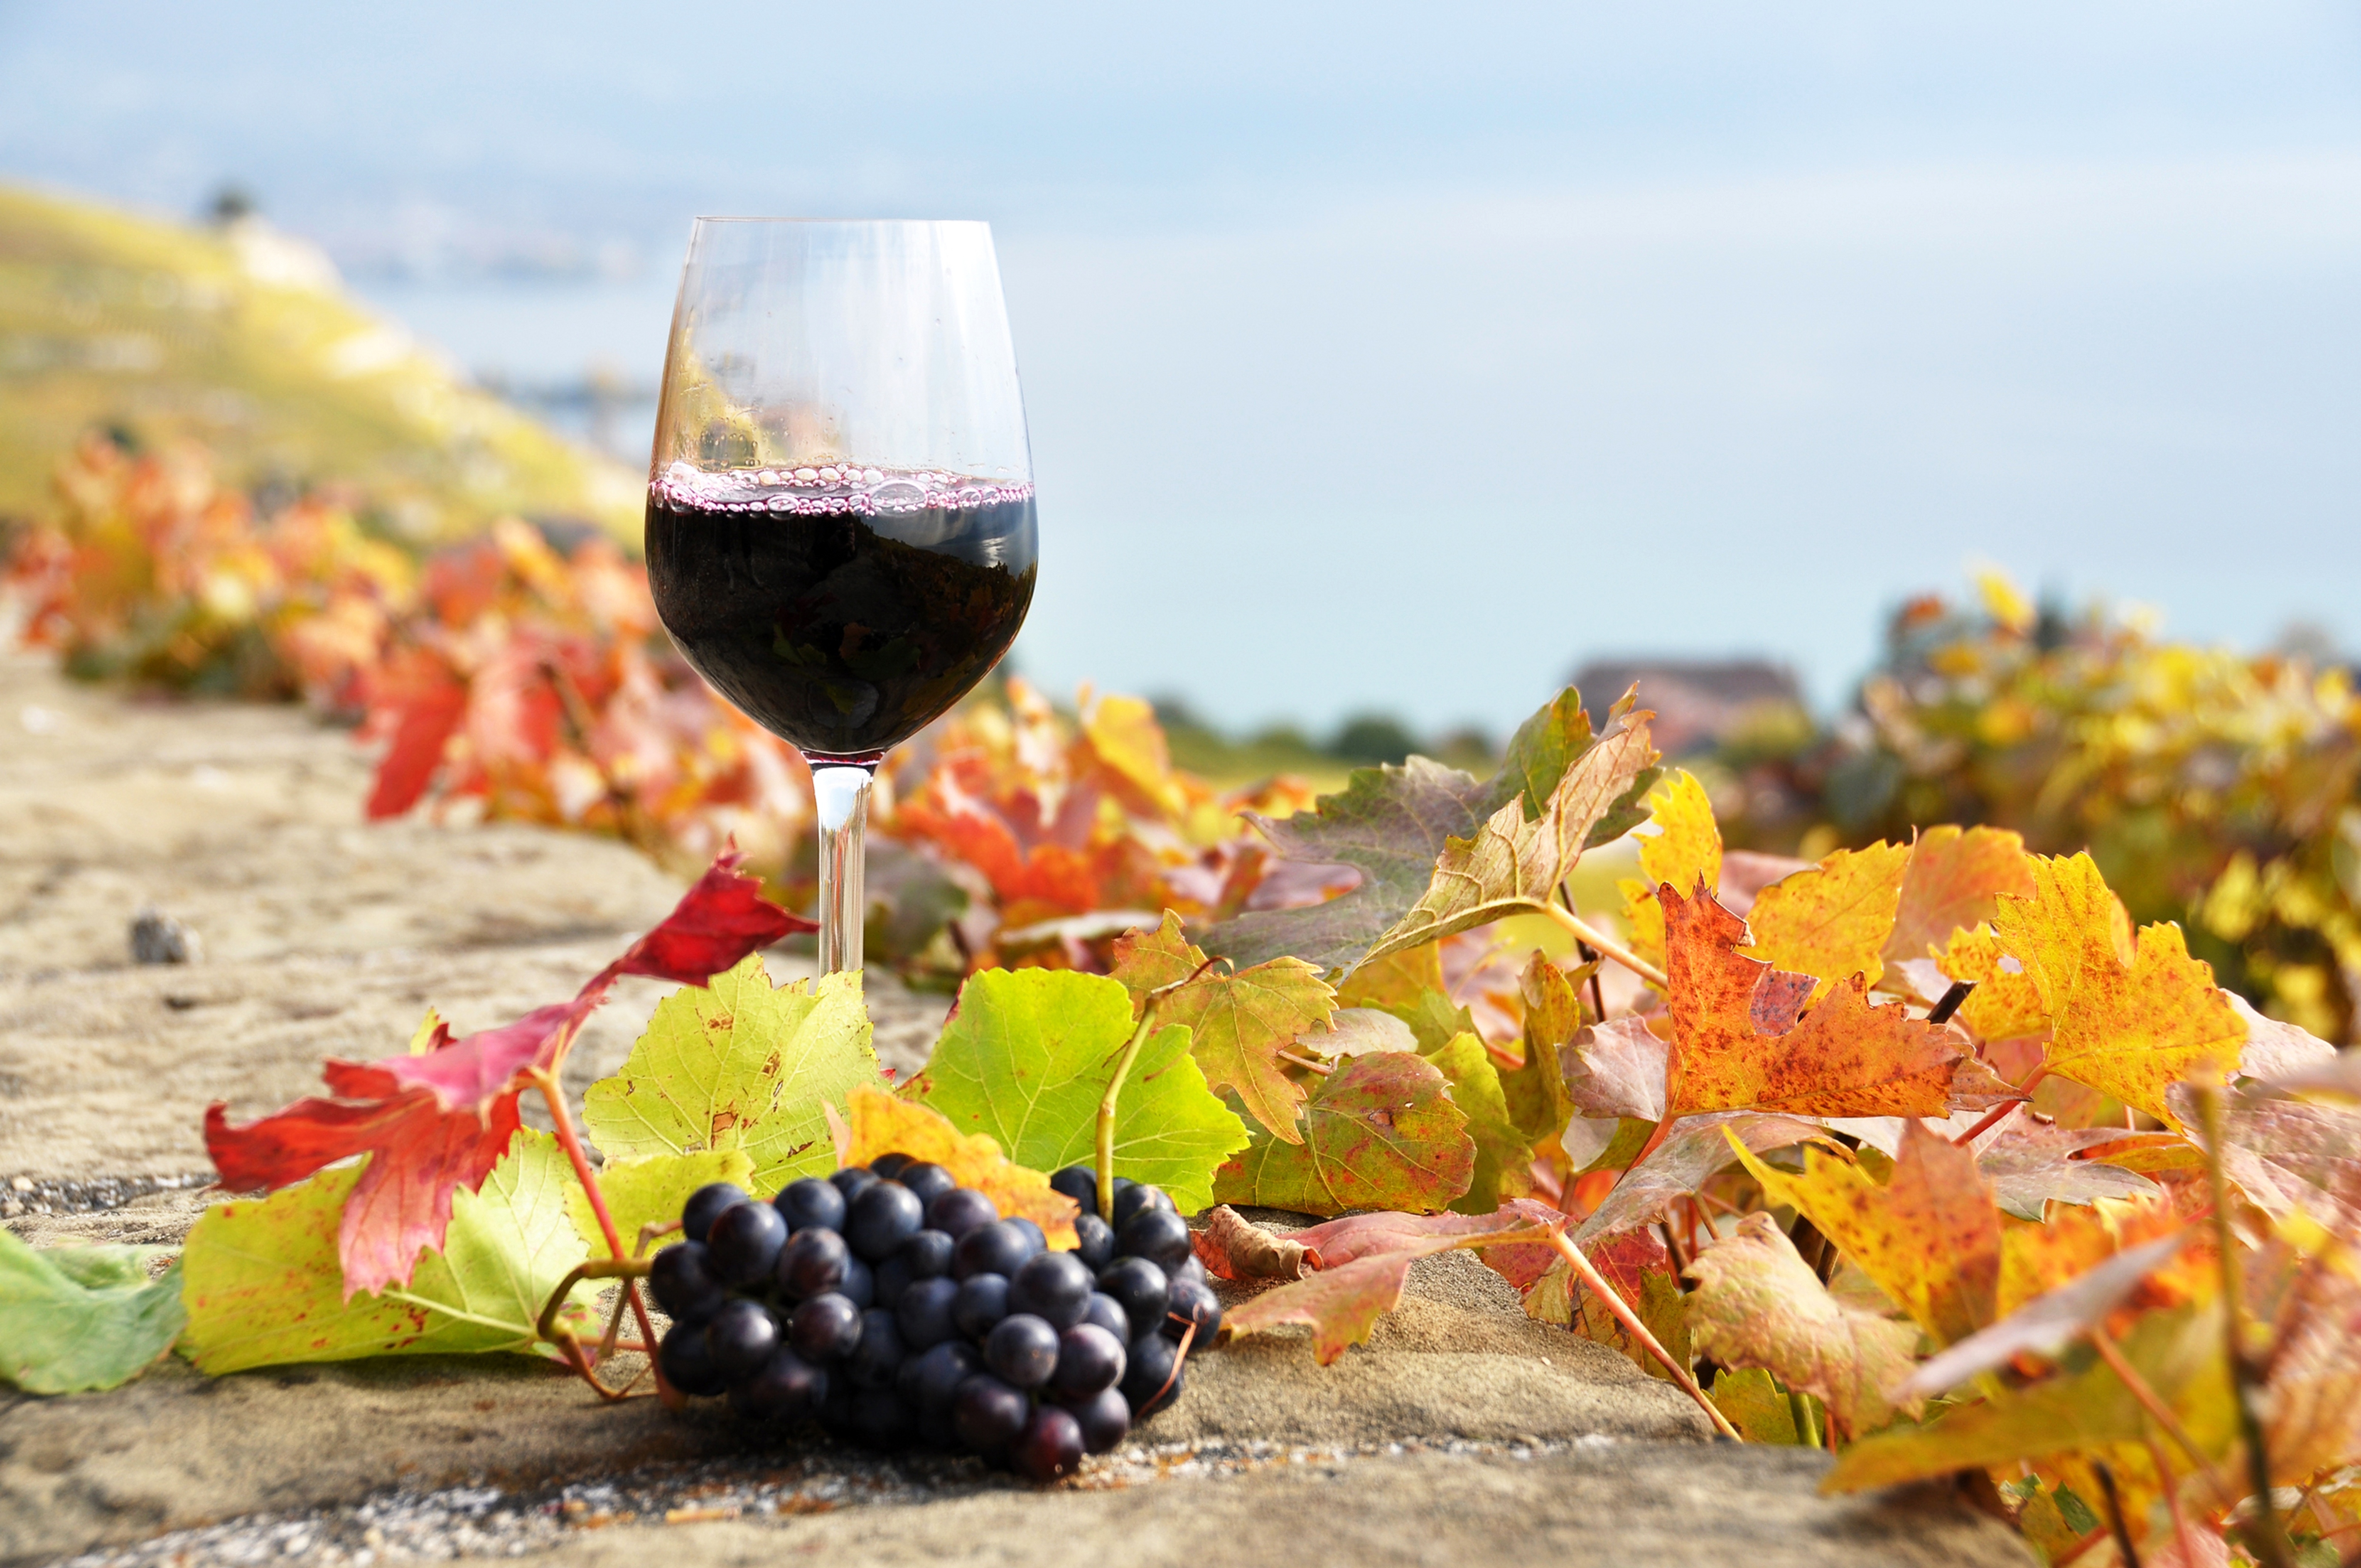 И реки полные вина. Вино осень. Виноградники вино. Виноградник у моря. Осенний бокал вина.